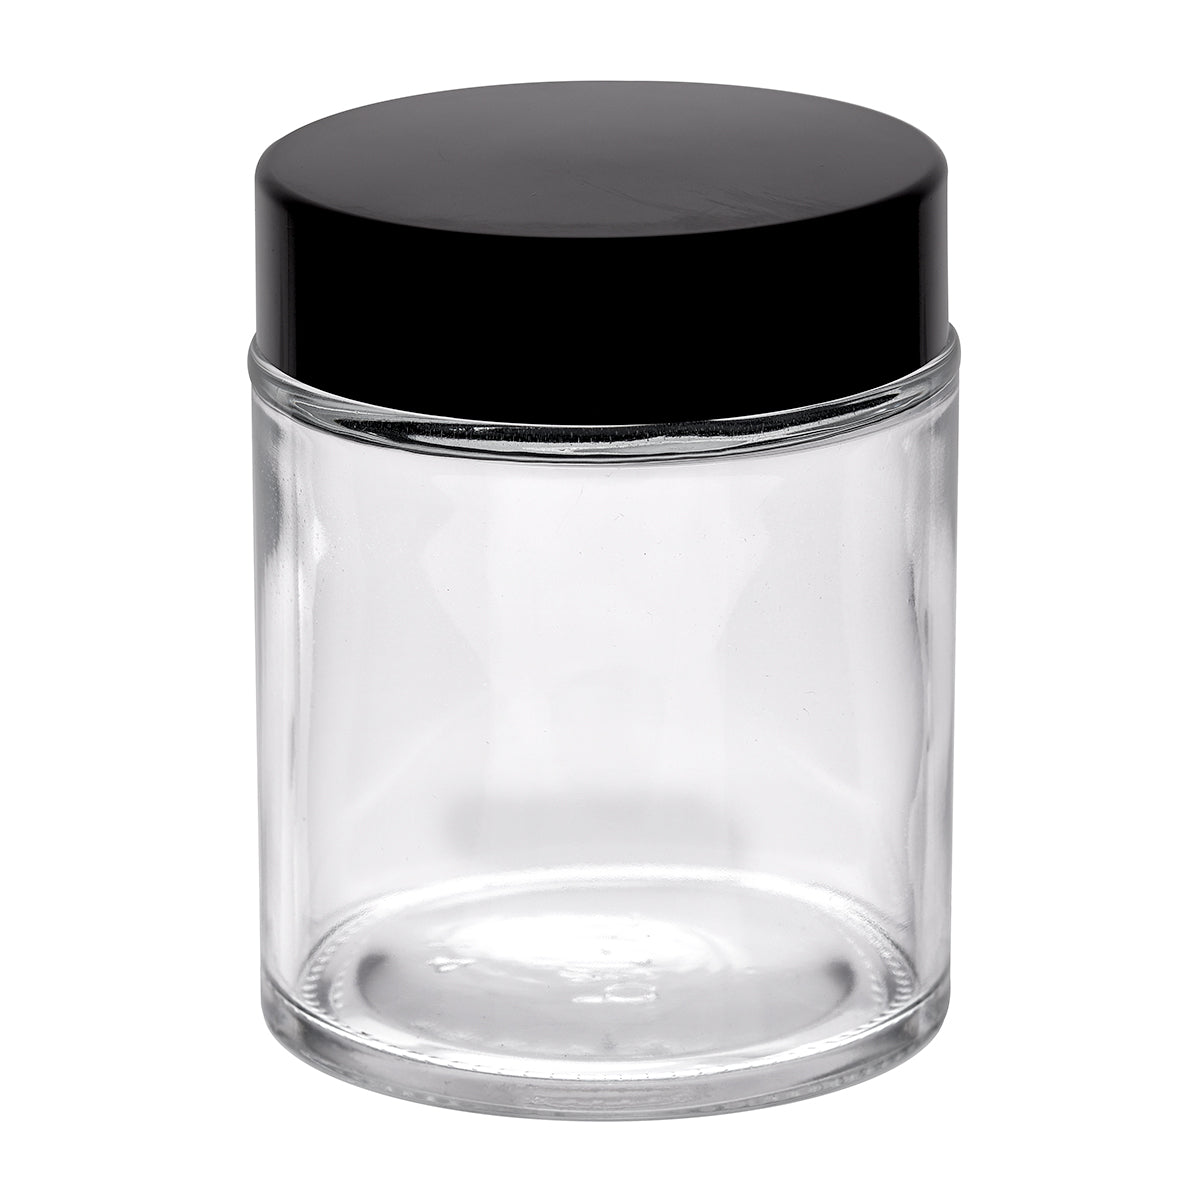 100ml Glass Pot - Clear